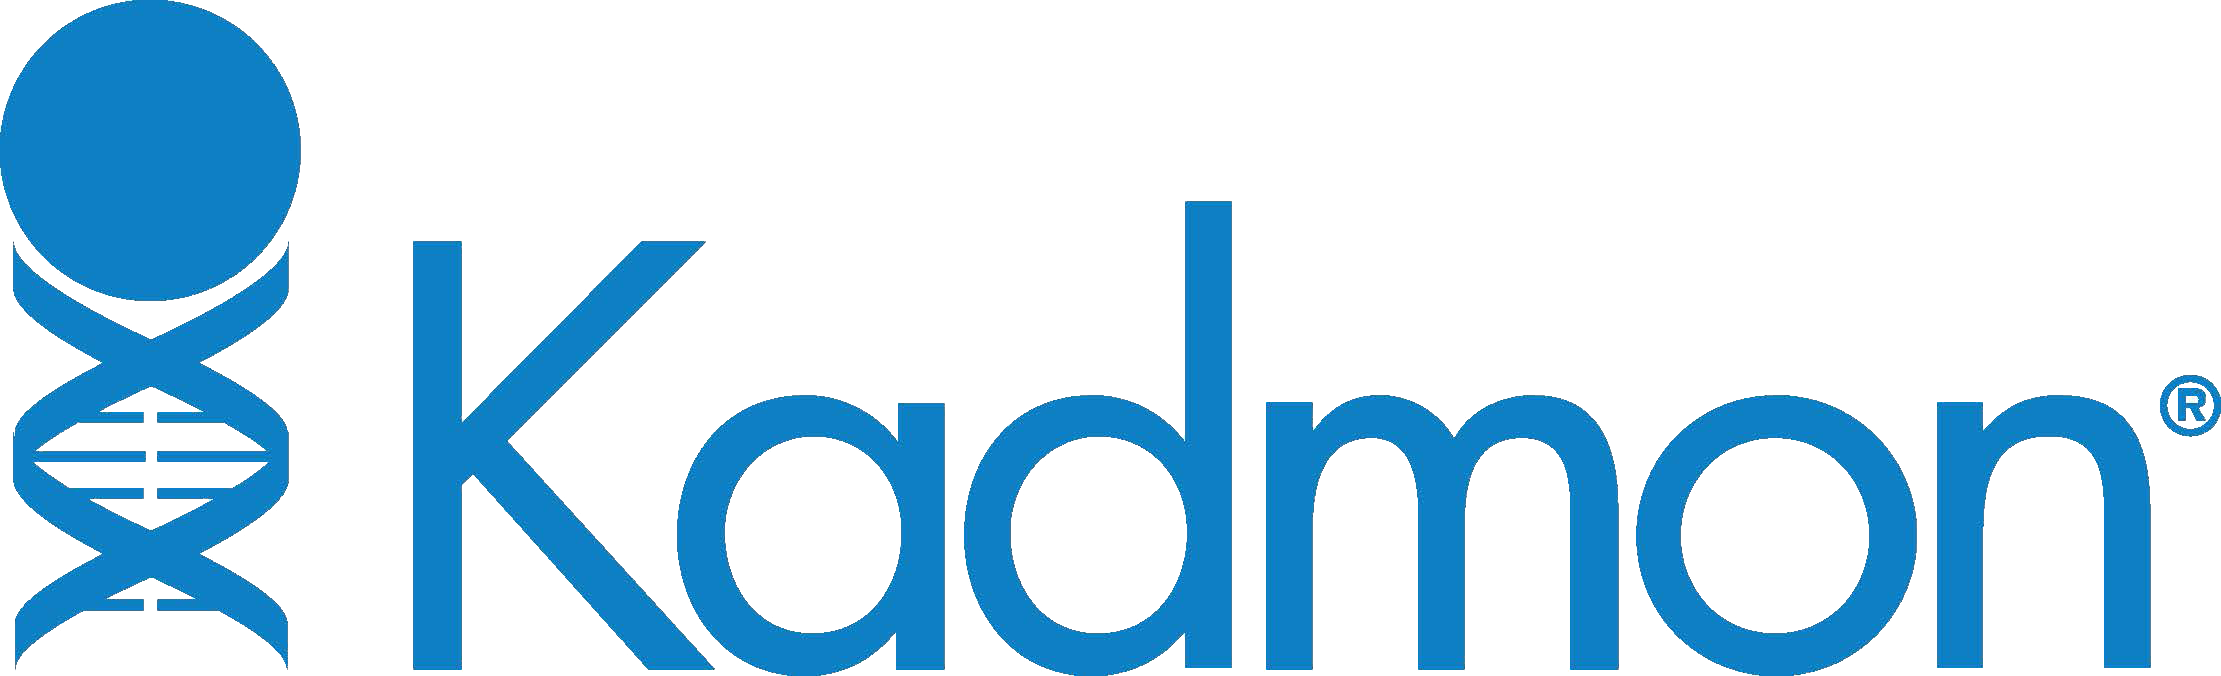 Kadmon logo - blue - 5 26 15_no_background.png